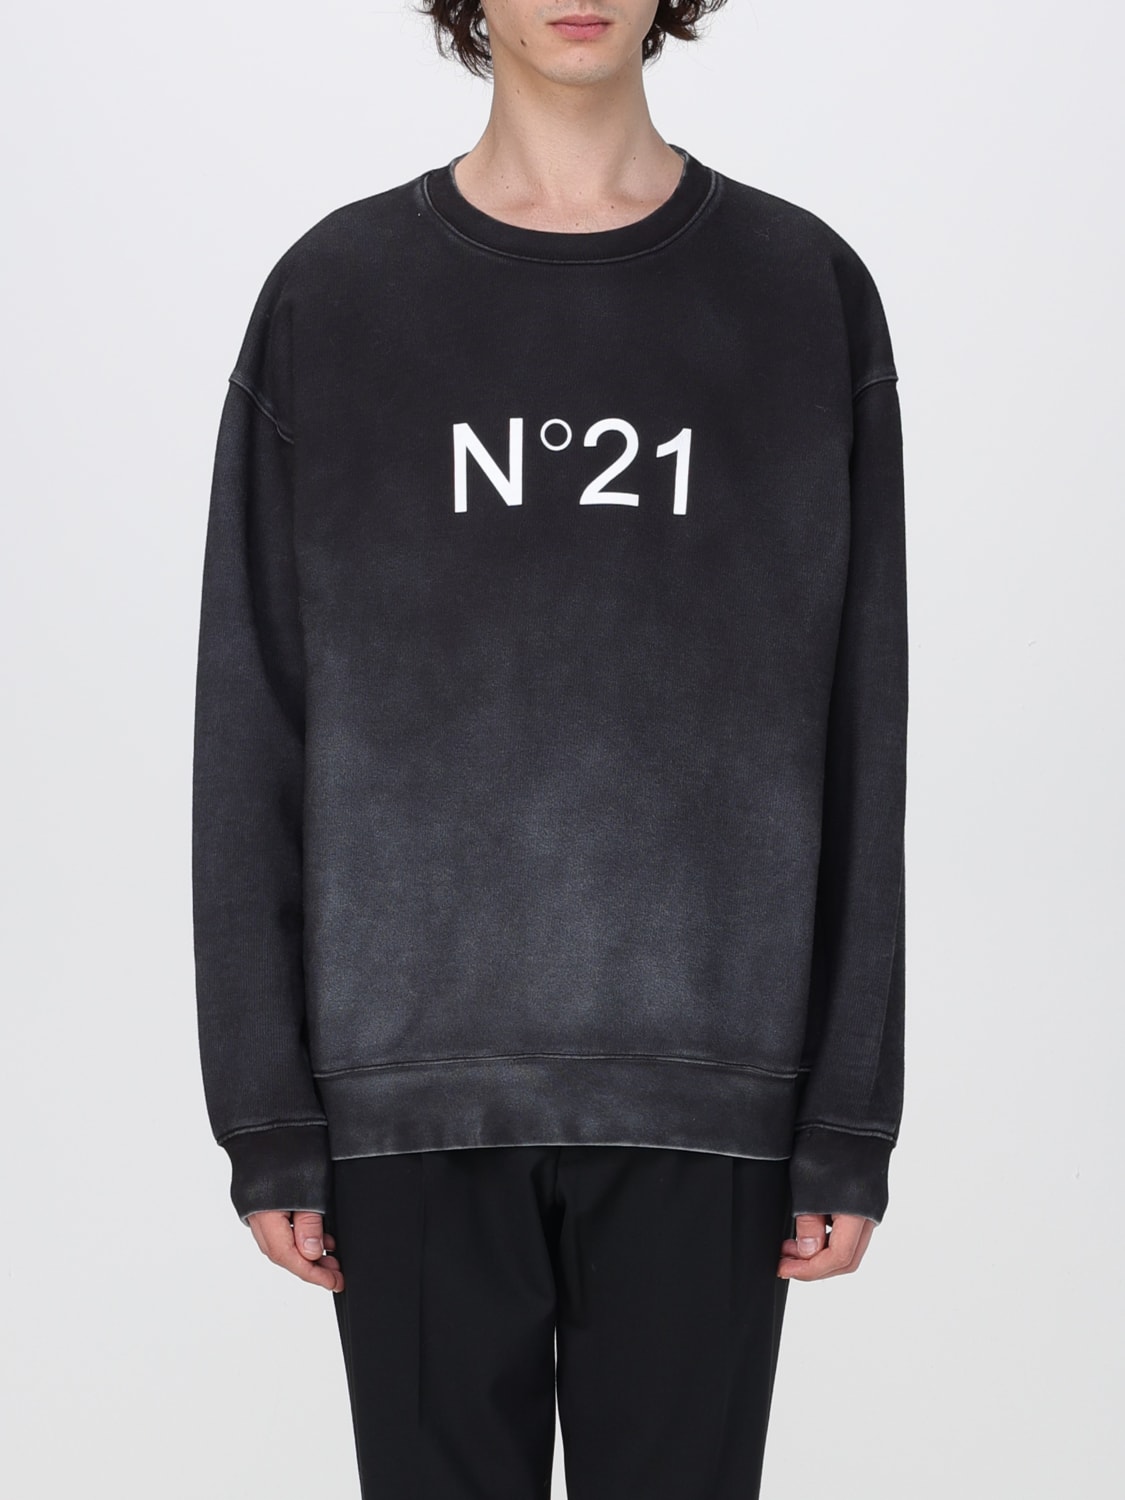 N° 21 Sweatshirt in cotton